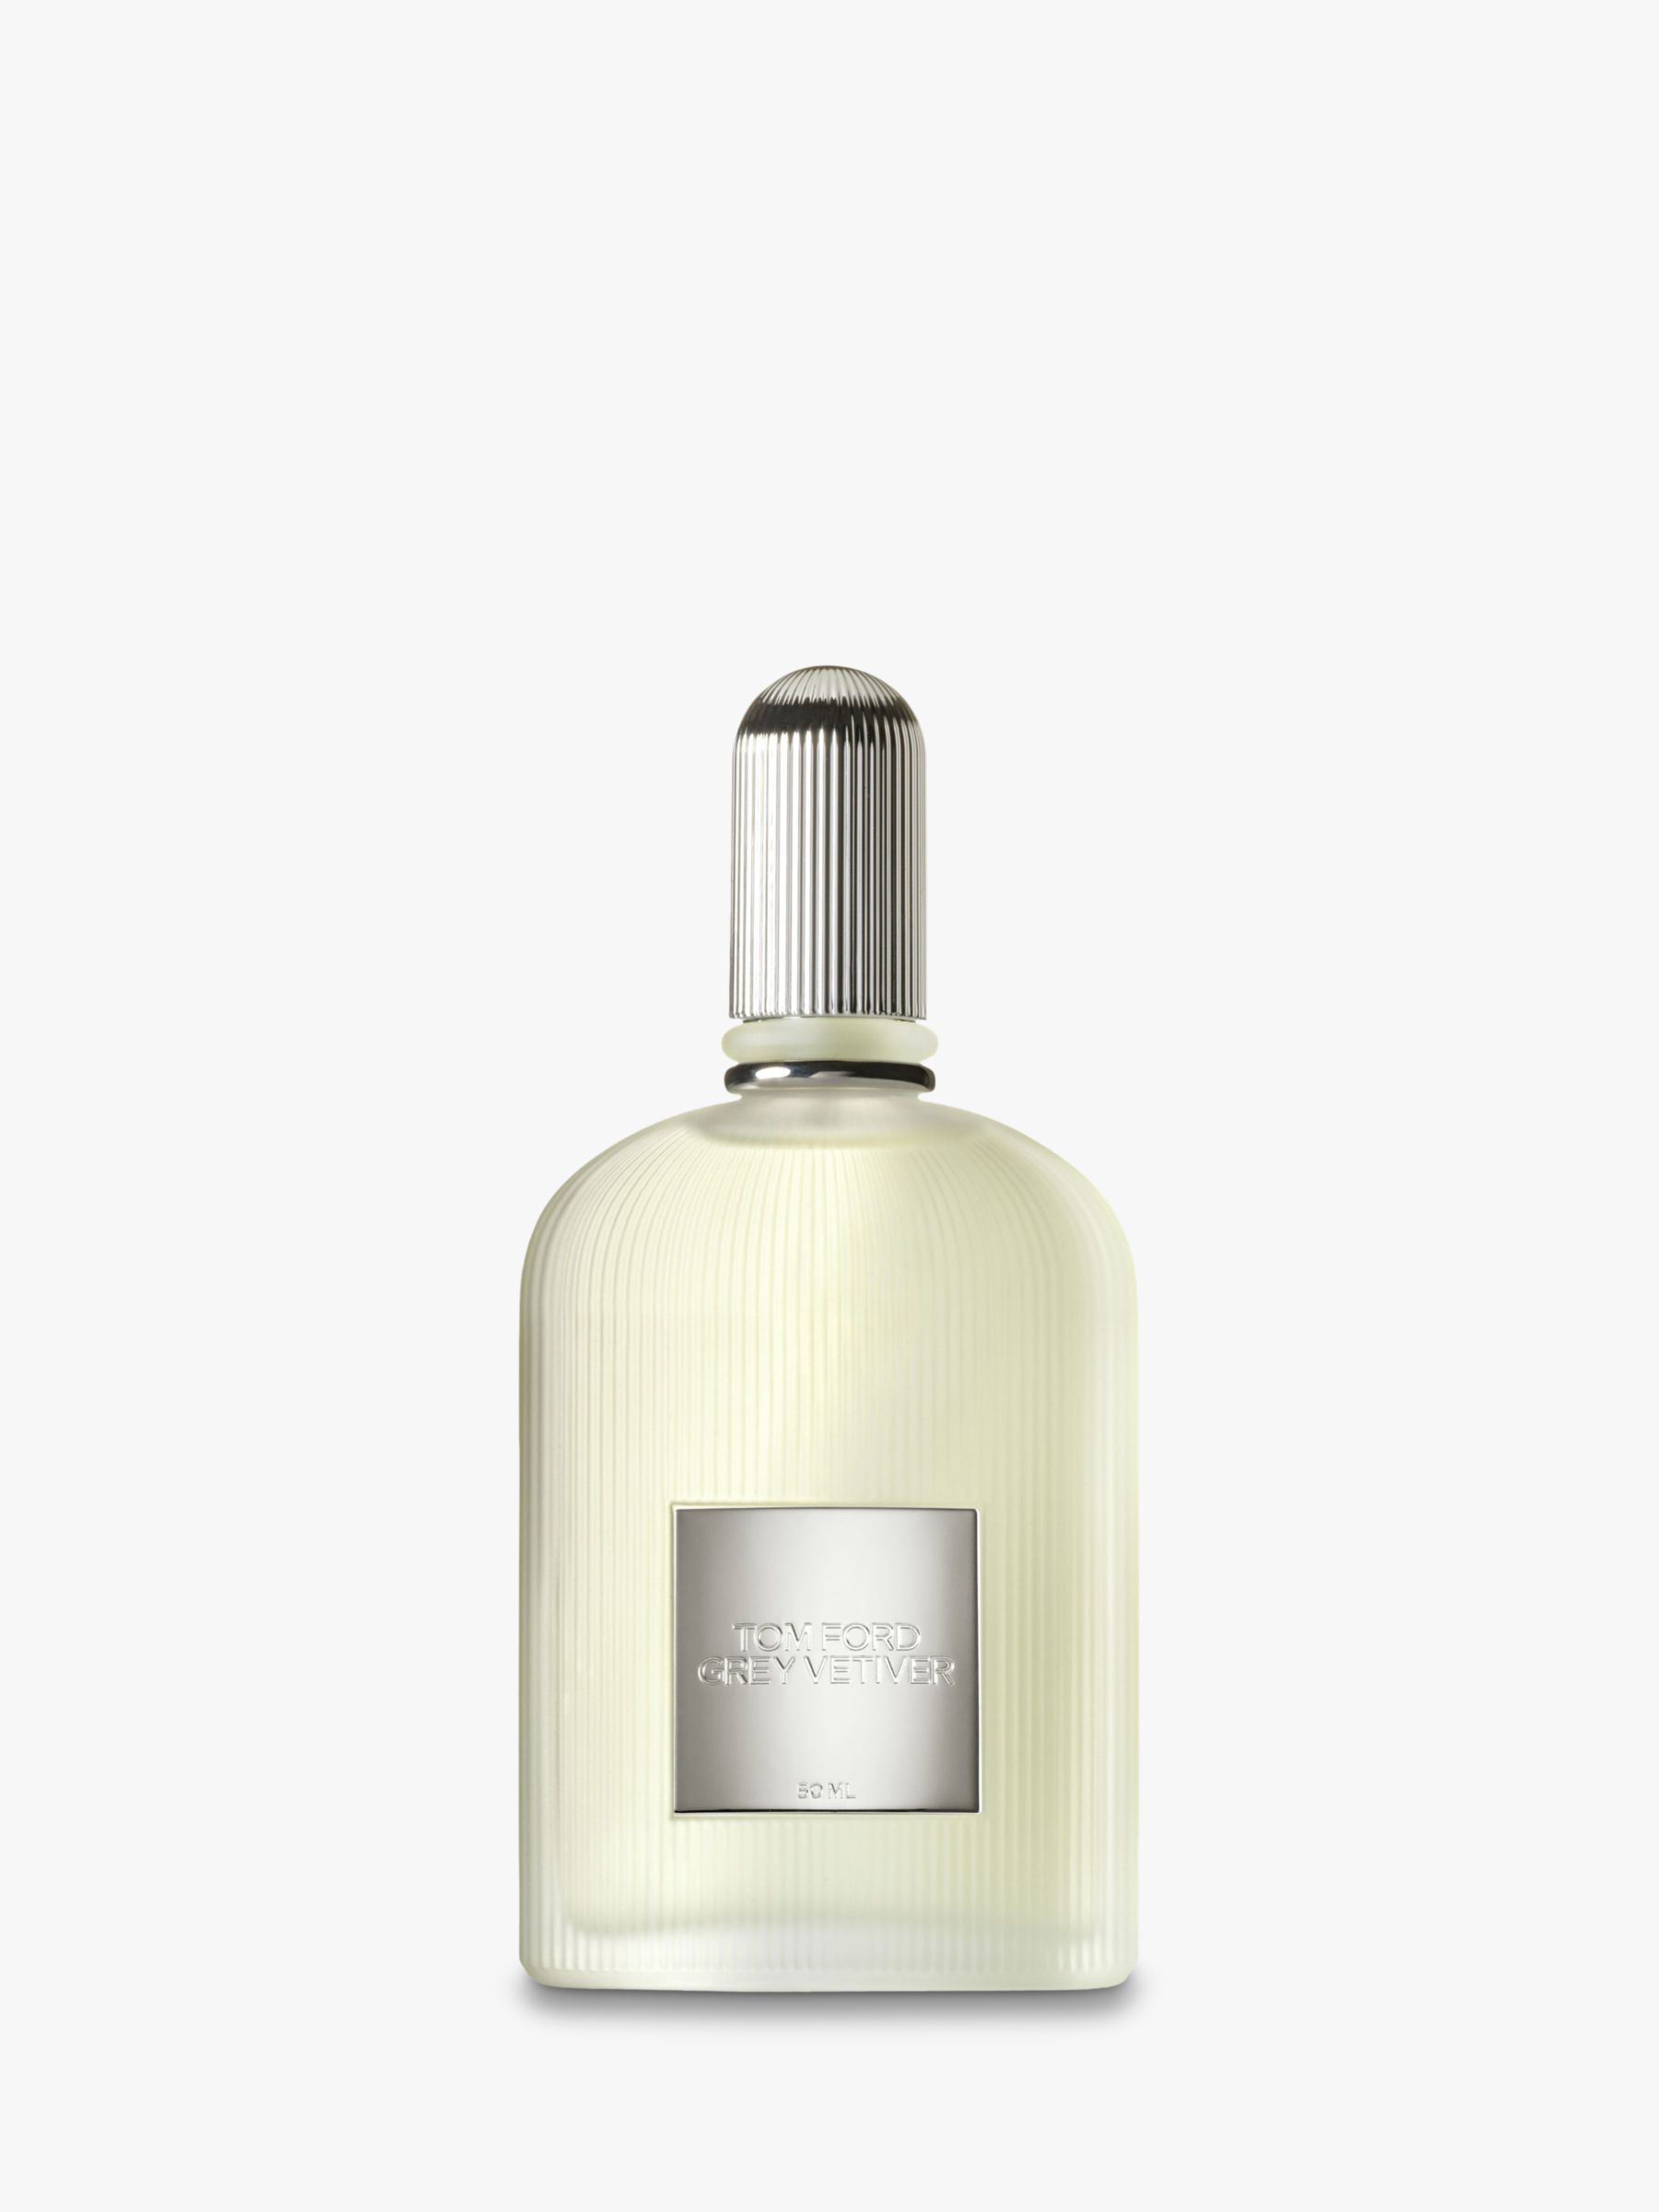 TOM FORD - Signature Fragrances | John Lewis & Partners